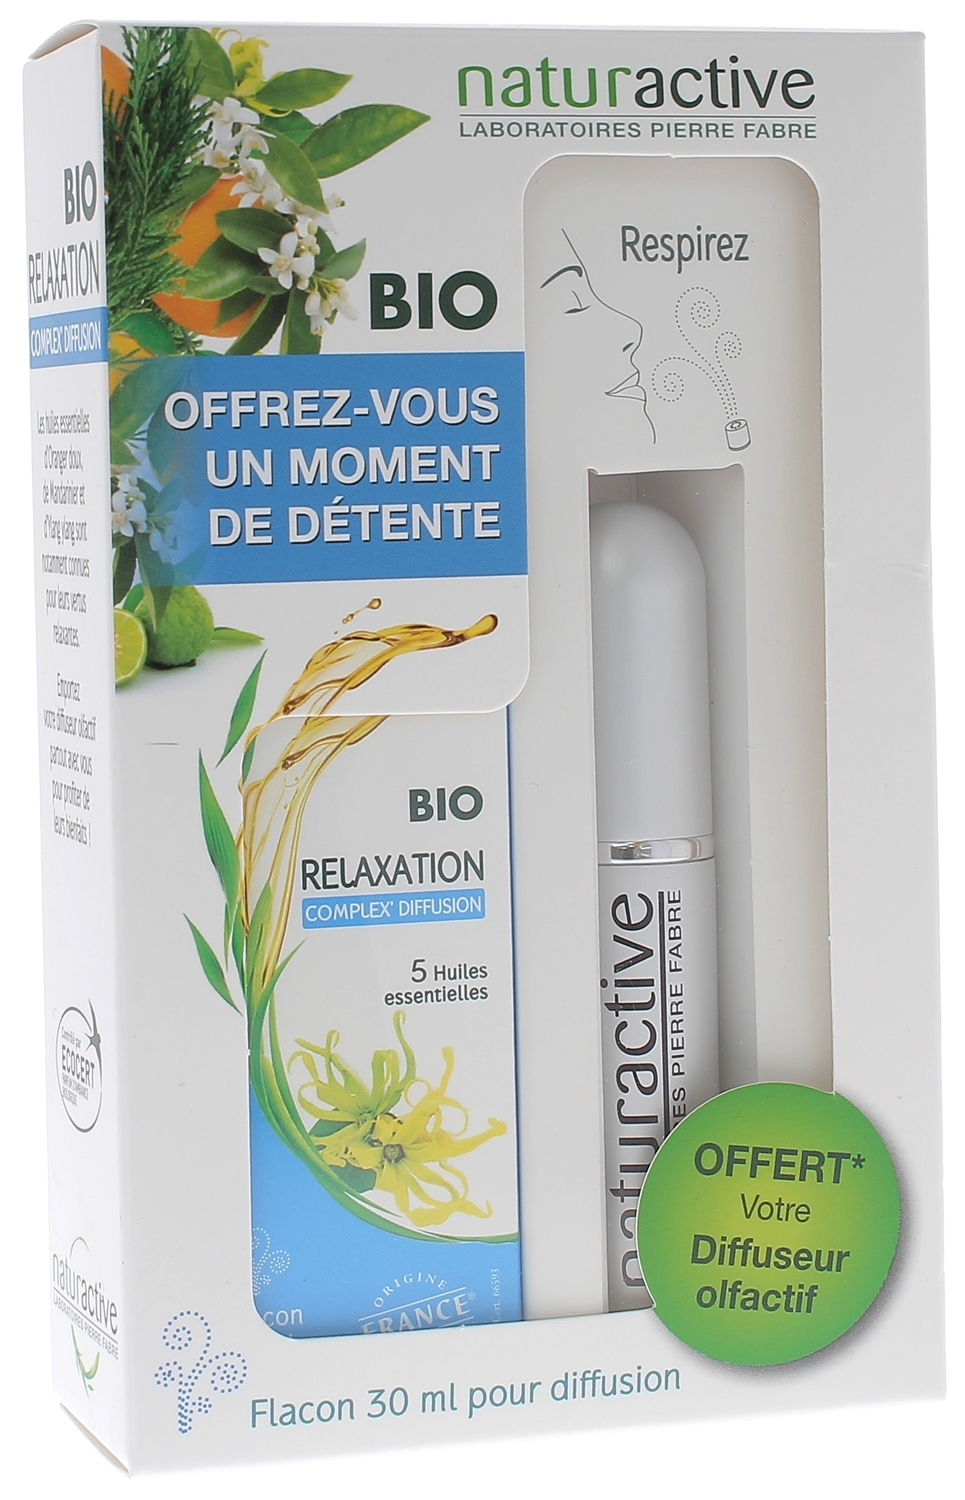 Complex' Diffusion relaxation bio 30 ml + diffuseur olfactif offert Naturactive - boîte contenant 2 produits